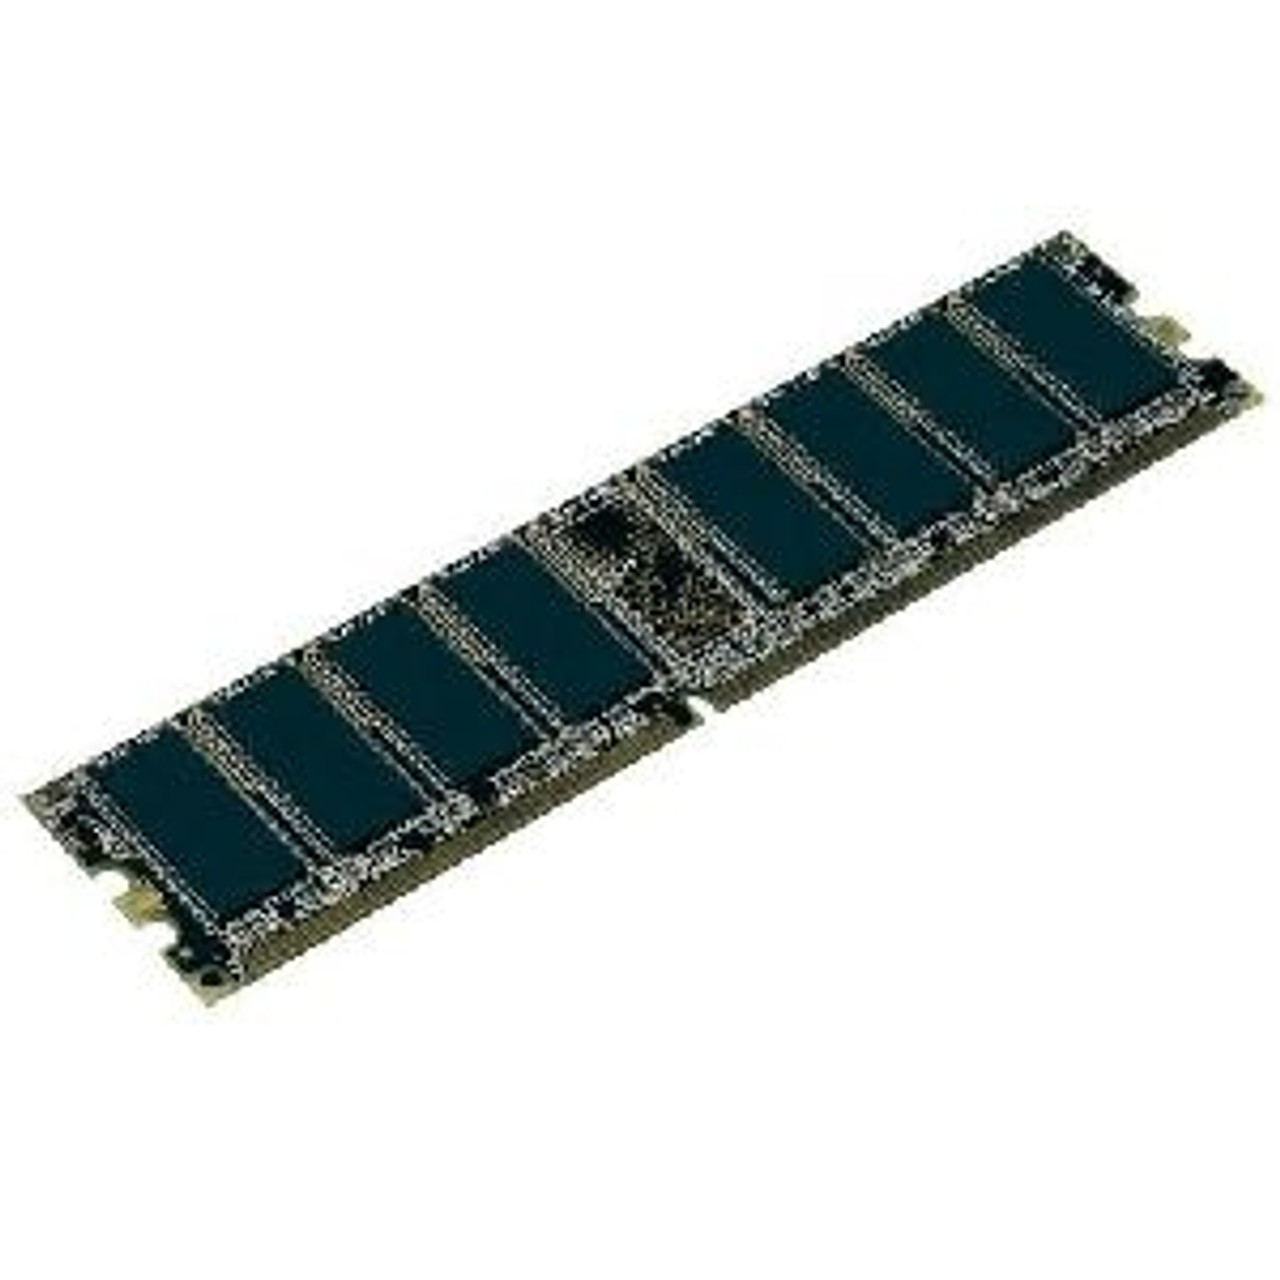 71321371-2 Smart Modular 512MB DDR SDRAM Memory Module